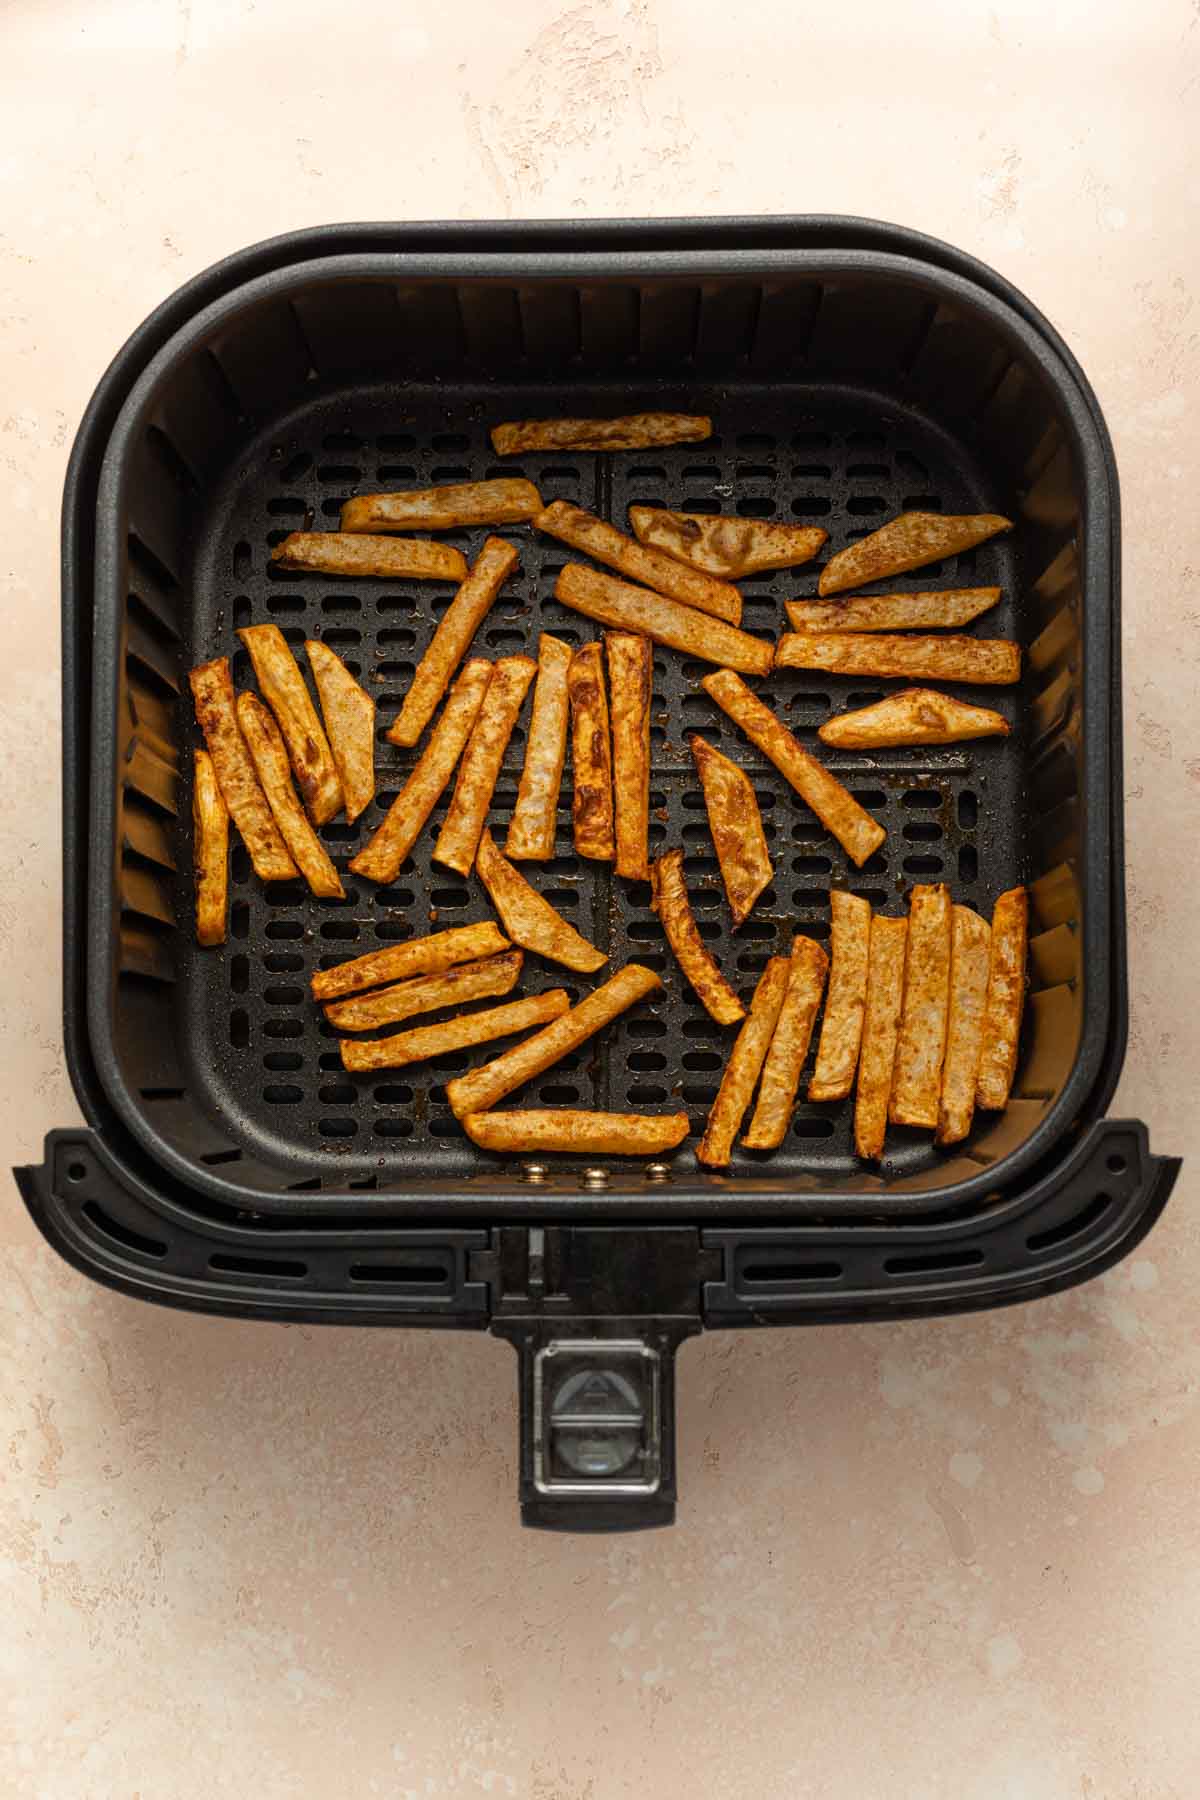 Air fried turnip fries in an air fryer basket.